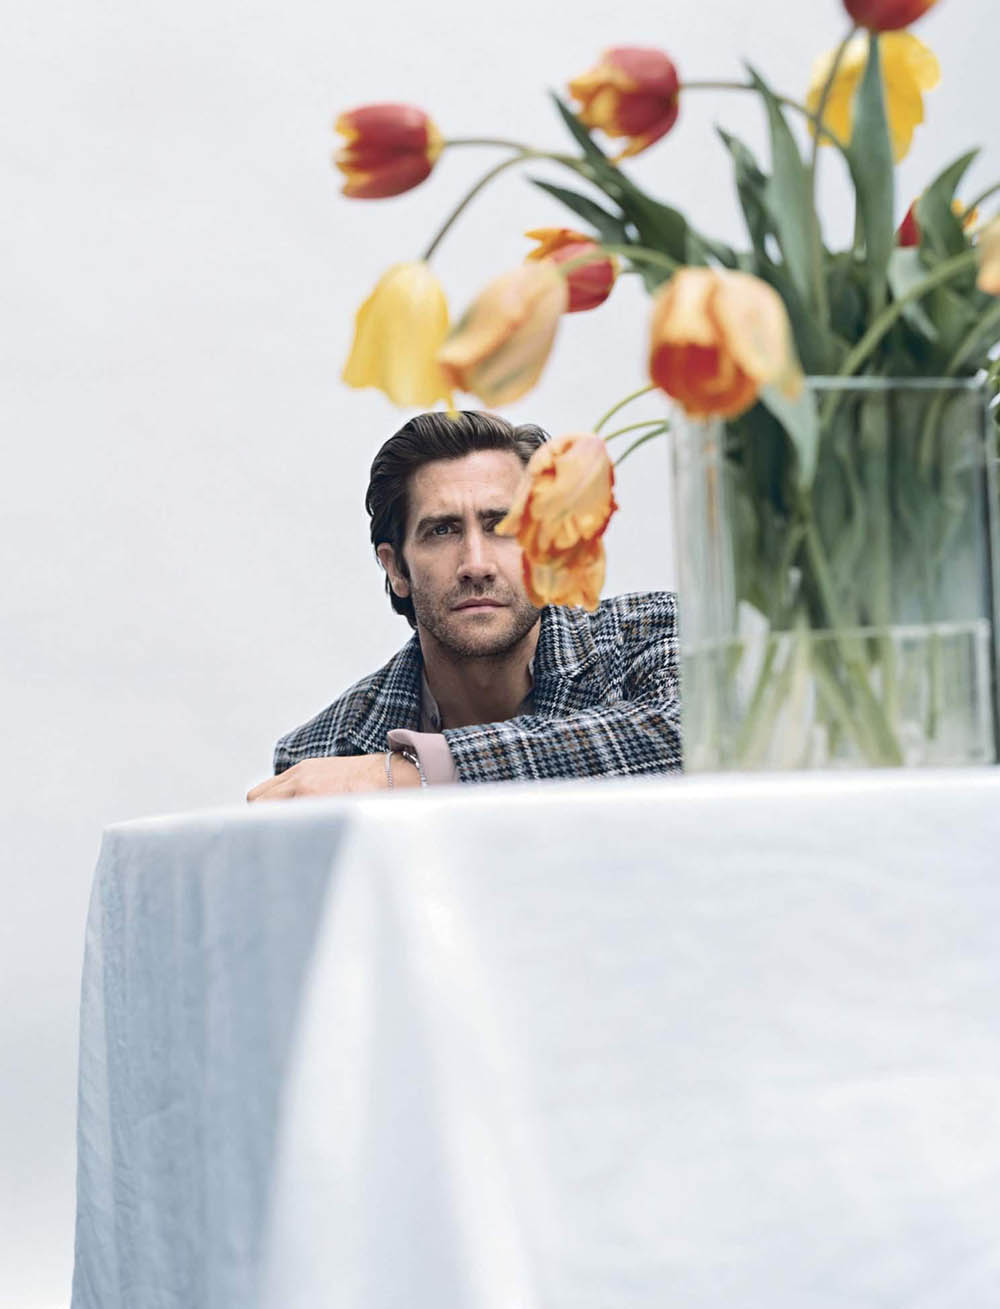 Jake Gyllenhaal covers L’Uomo Vogue July 2019 by Josh Olins